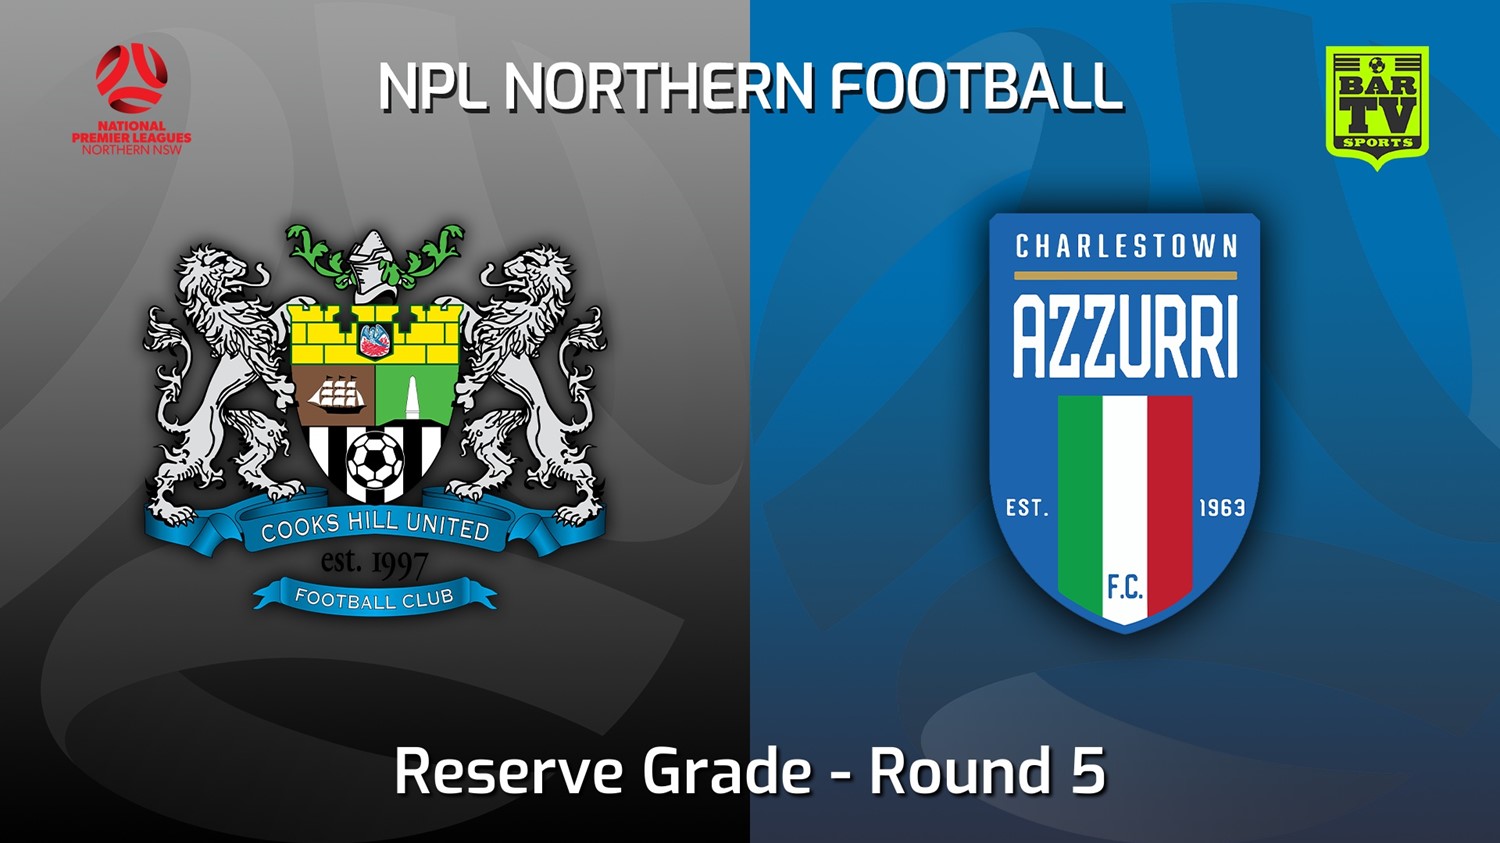 220511-NNSW NPLM Res Round 5 - Cooks Hill United FC (Res) v Charlestown Azzurri FC Res (2) Minigame Slate Image